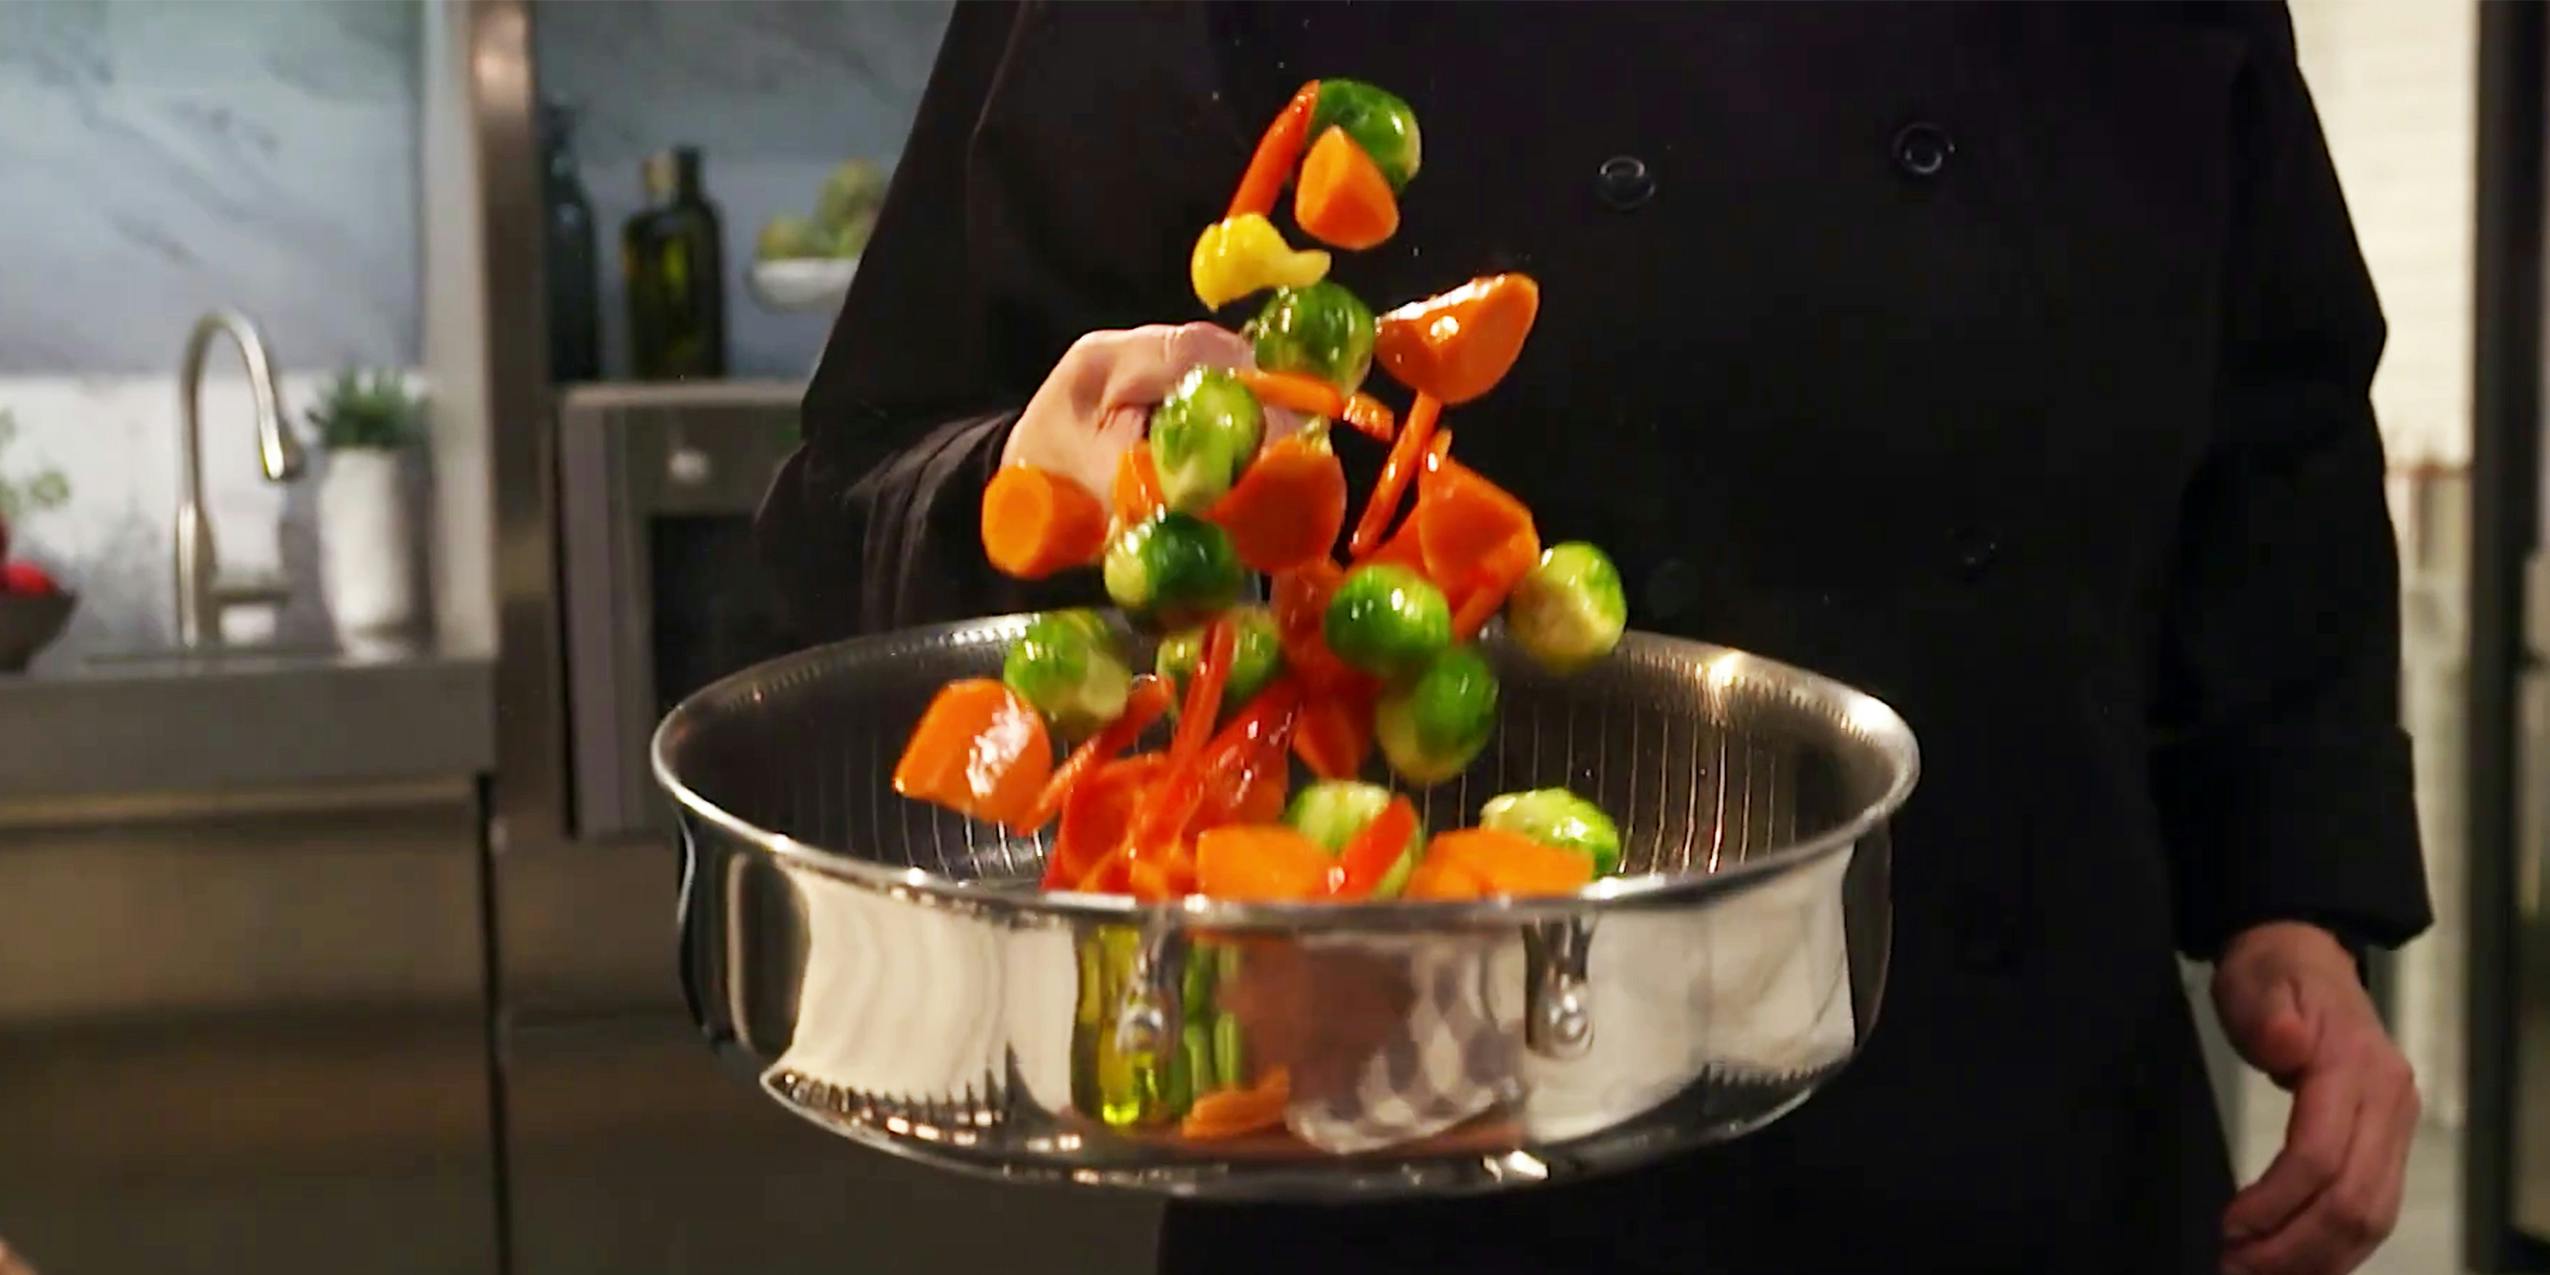 Copper Chef Titan Pan vs. HexClad: A Comprehensive Cookware Comparison and  Review